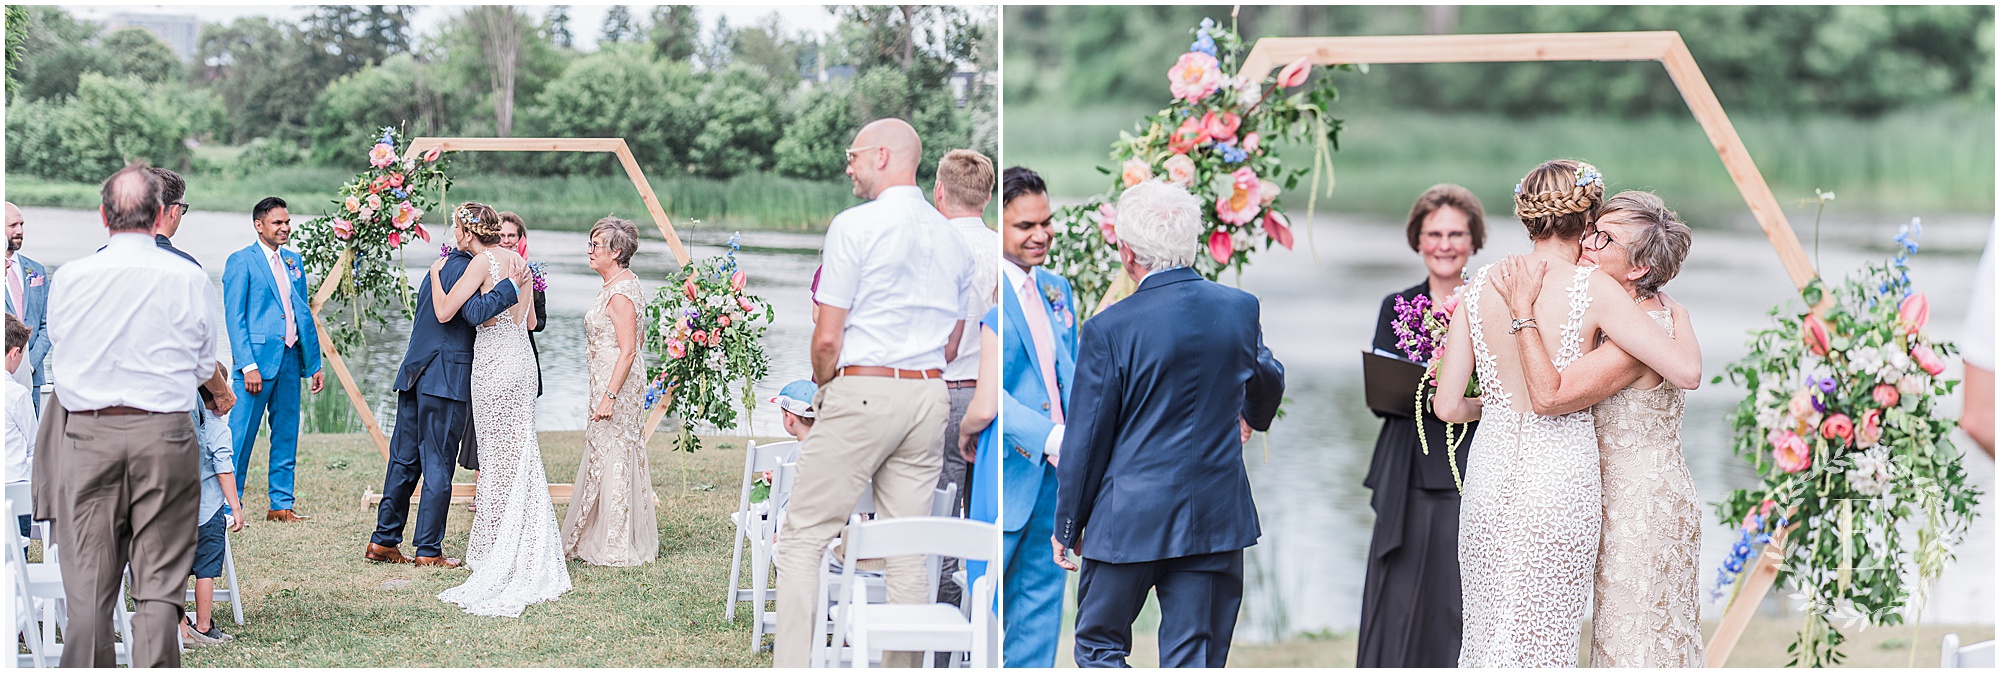 207 Cait and Saaqib Jabberwocky Ottawa Wedding 2019 - Photography by Emma.jpg